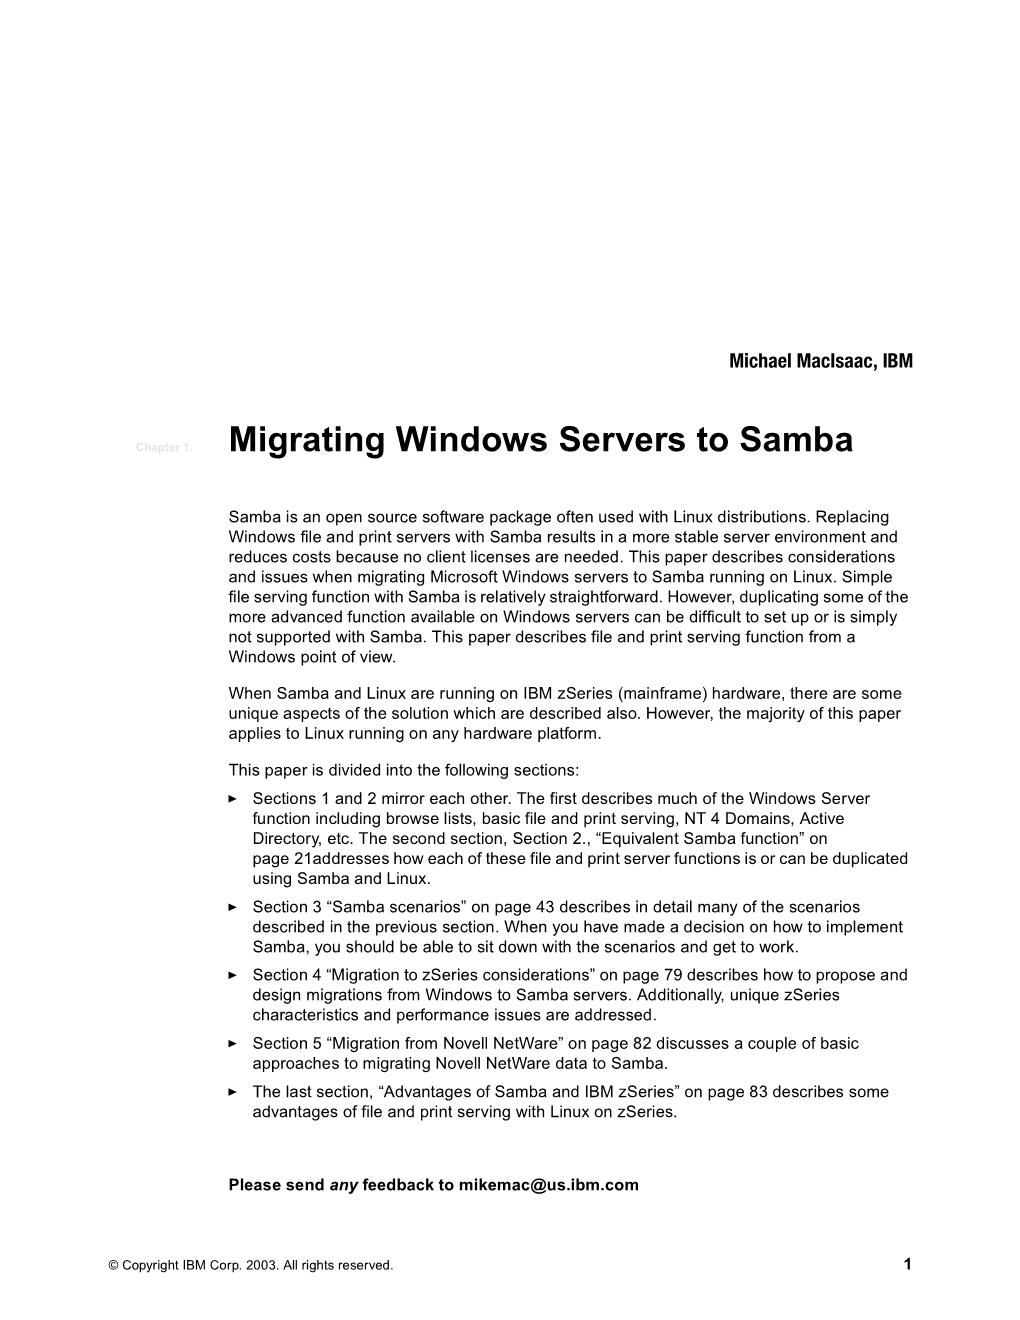 Migrating Windows Servers to Samba